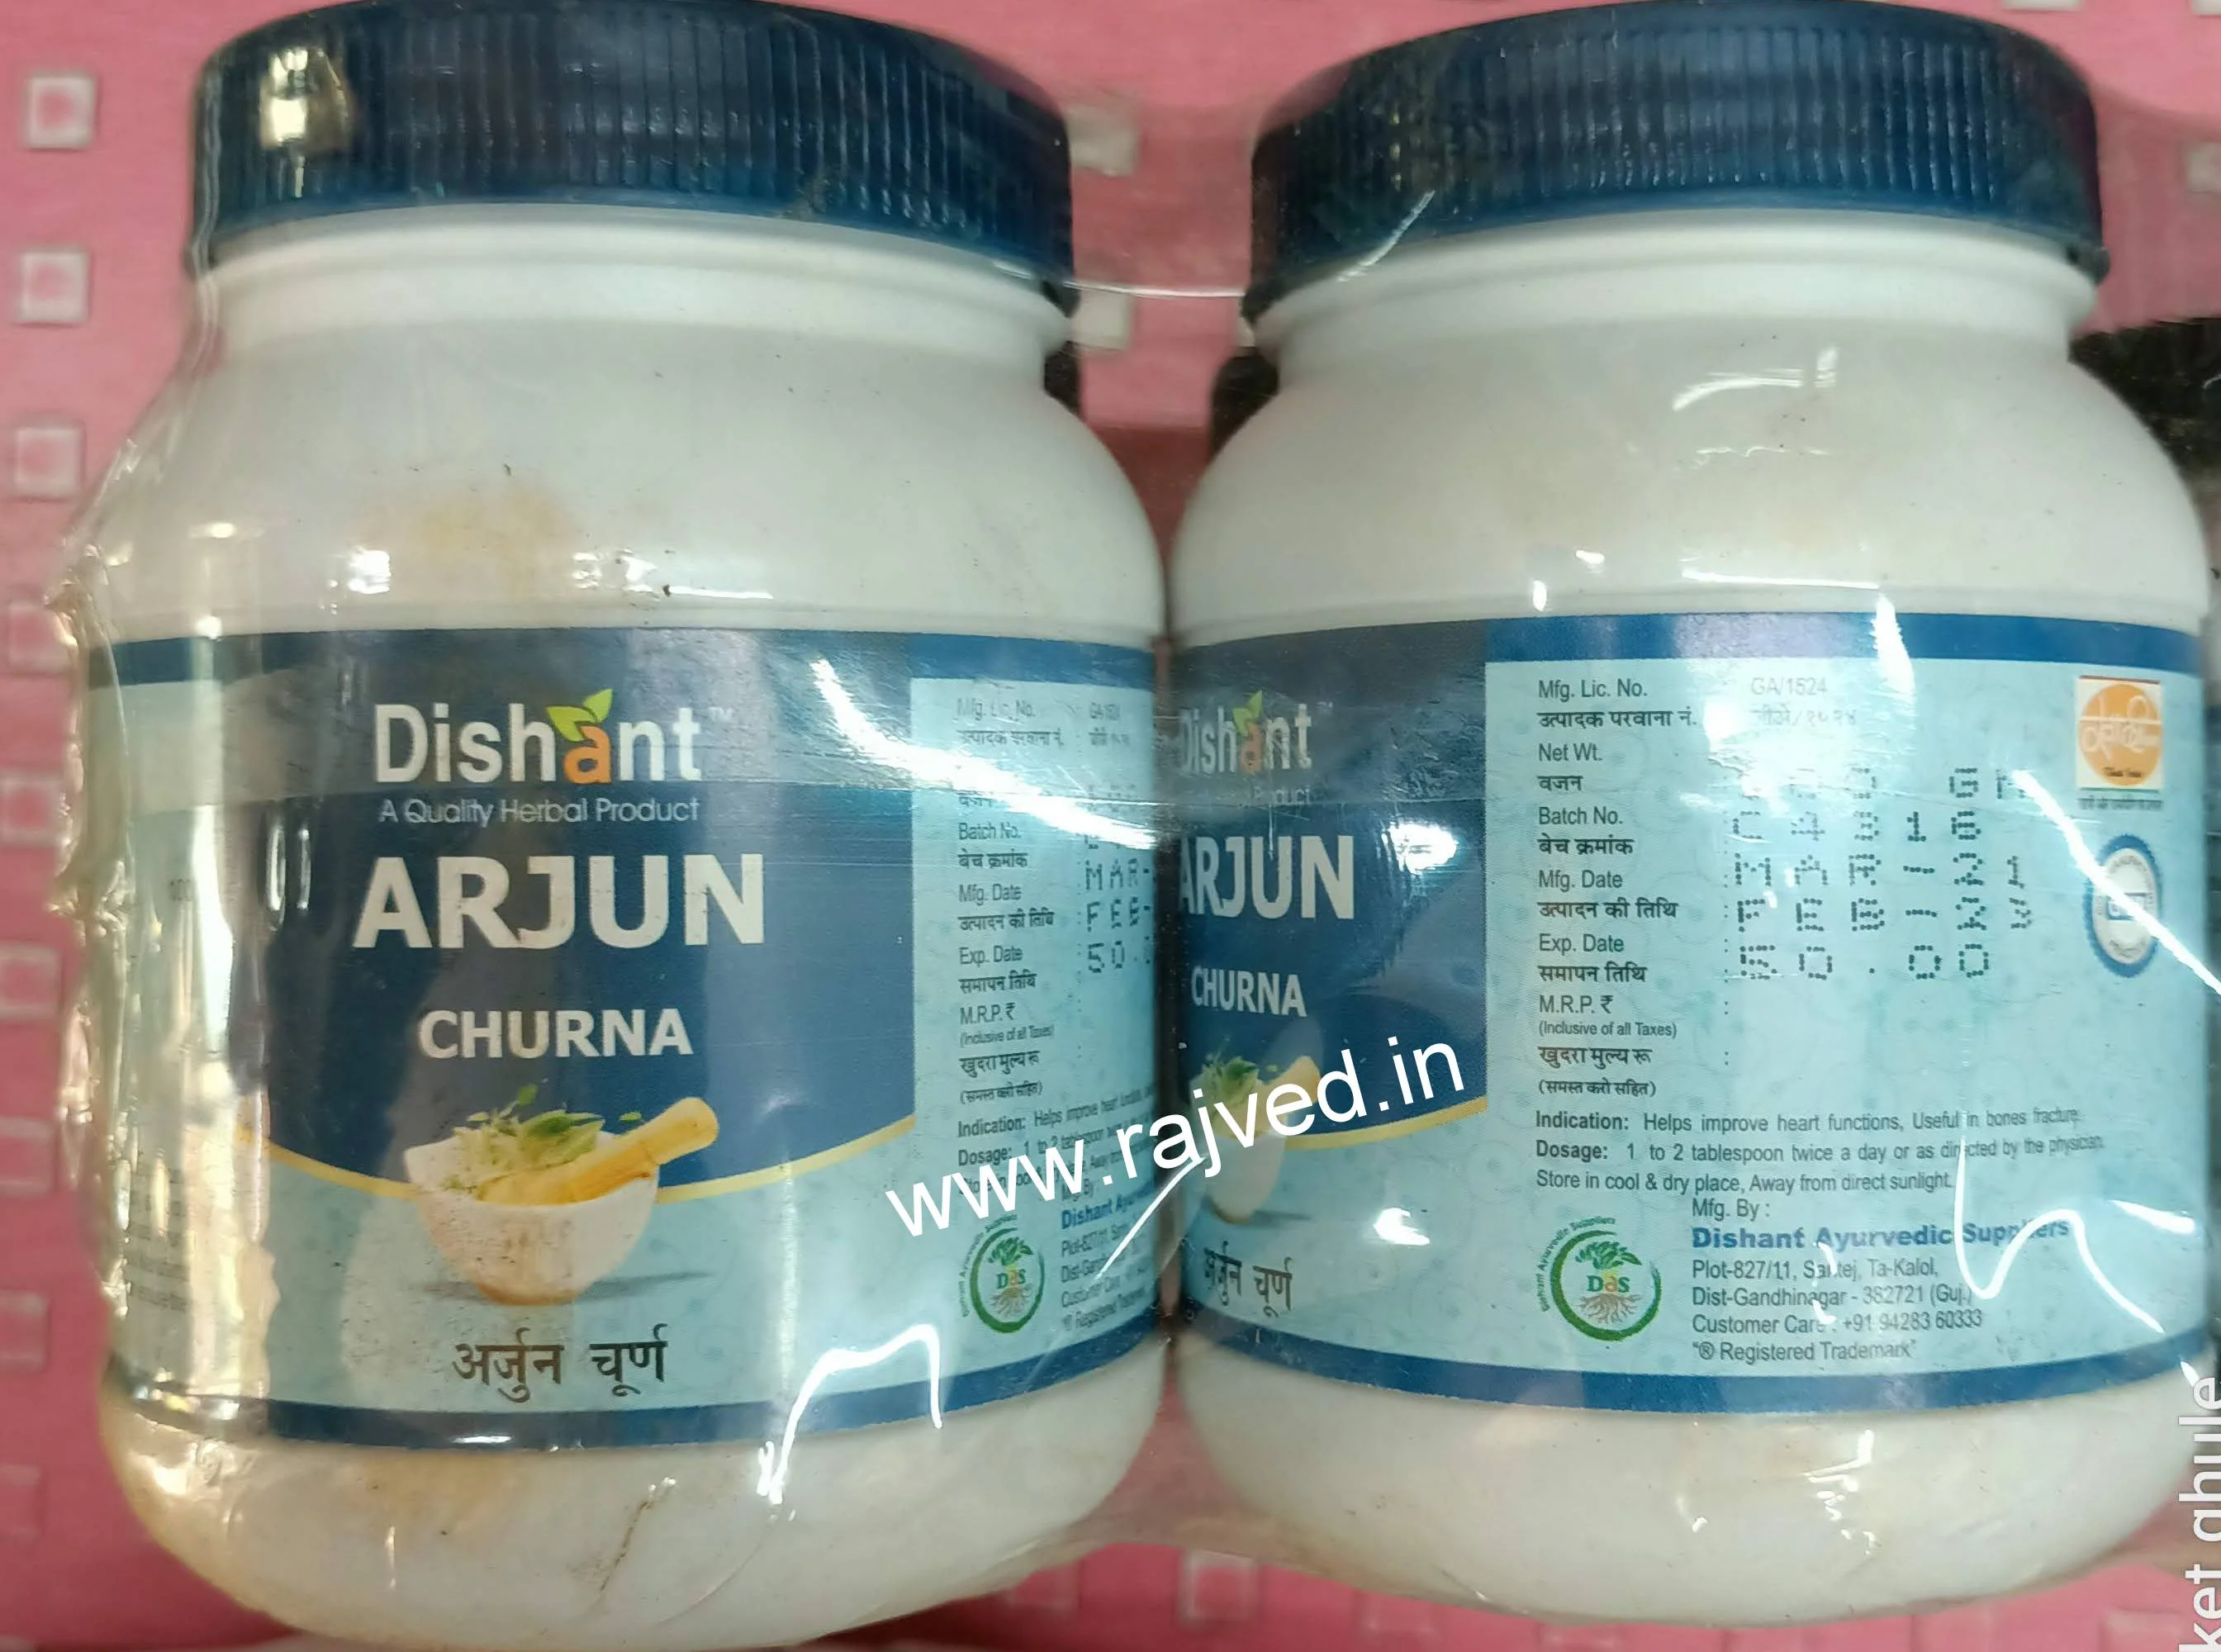 arjun churna 500 gm upto 20% off dishant ayurvedic suppliers